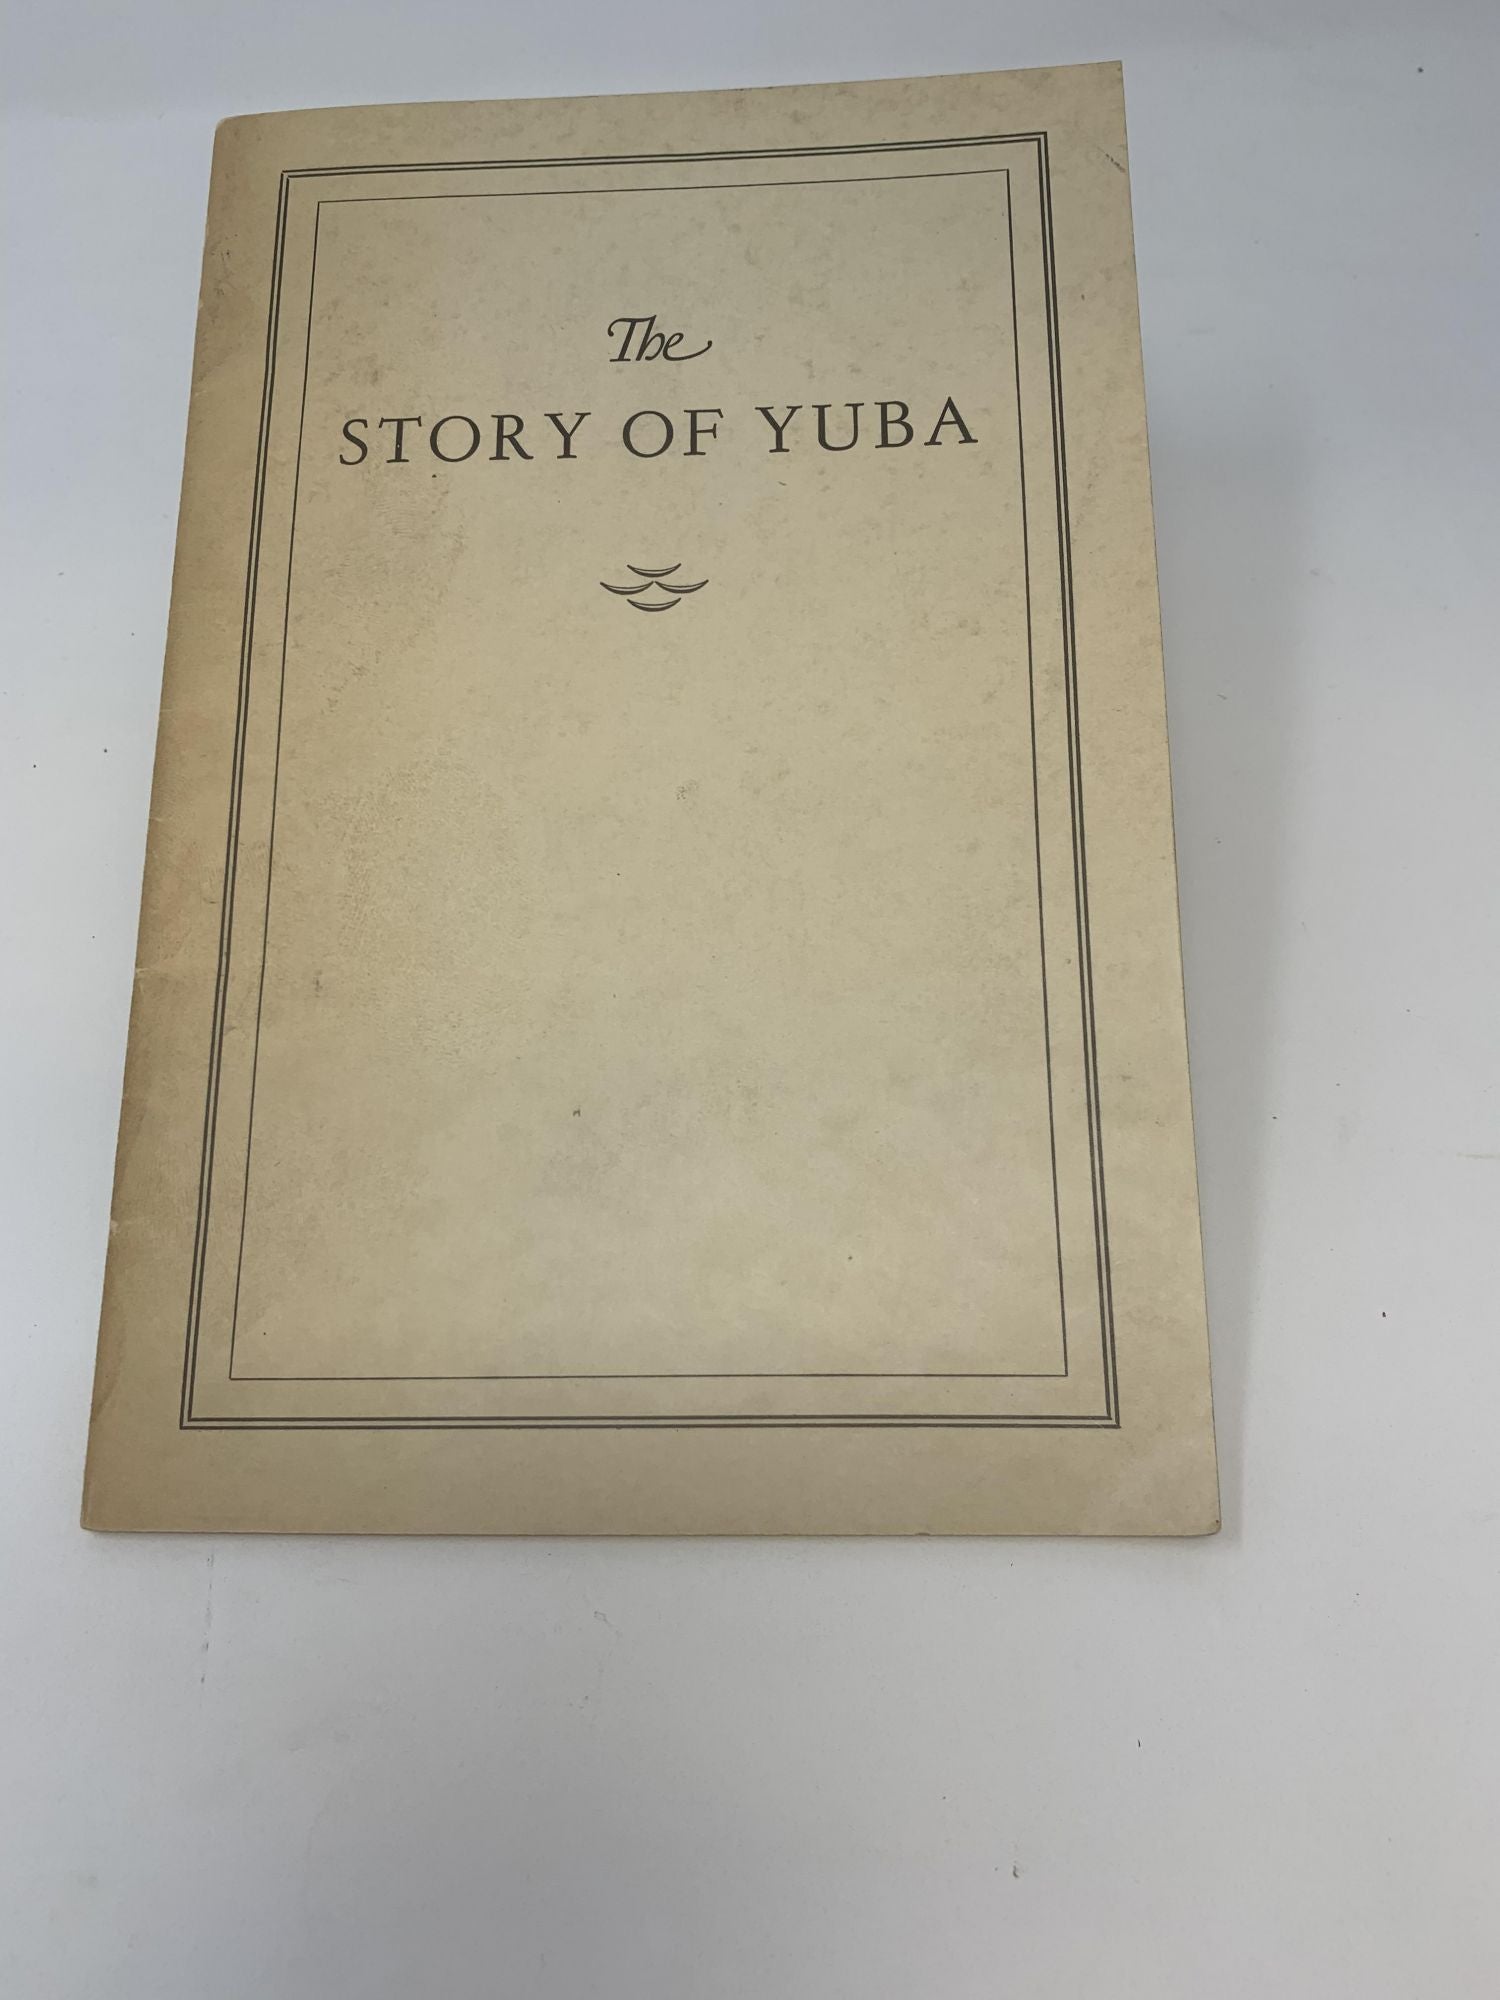 Walker's Manual, Inc - The Story of Yuba